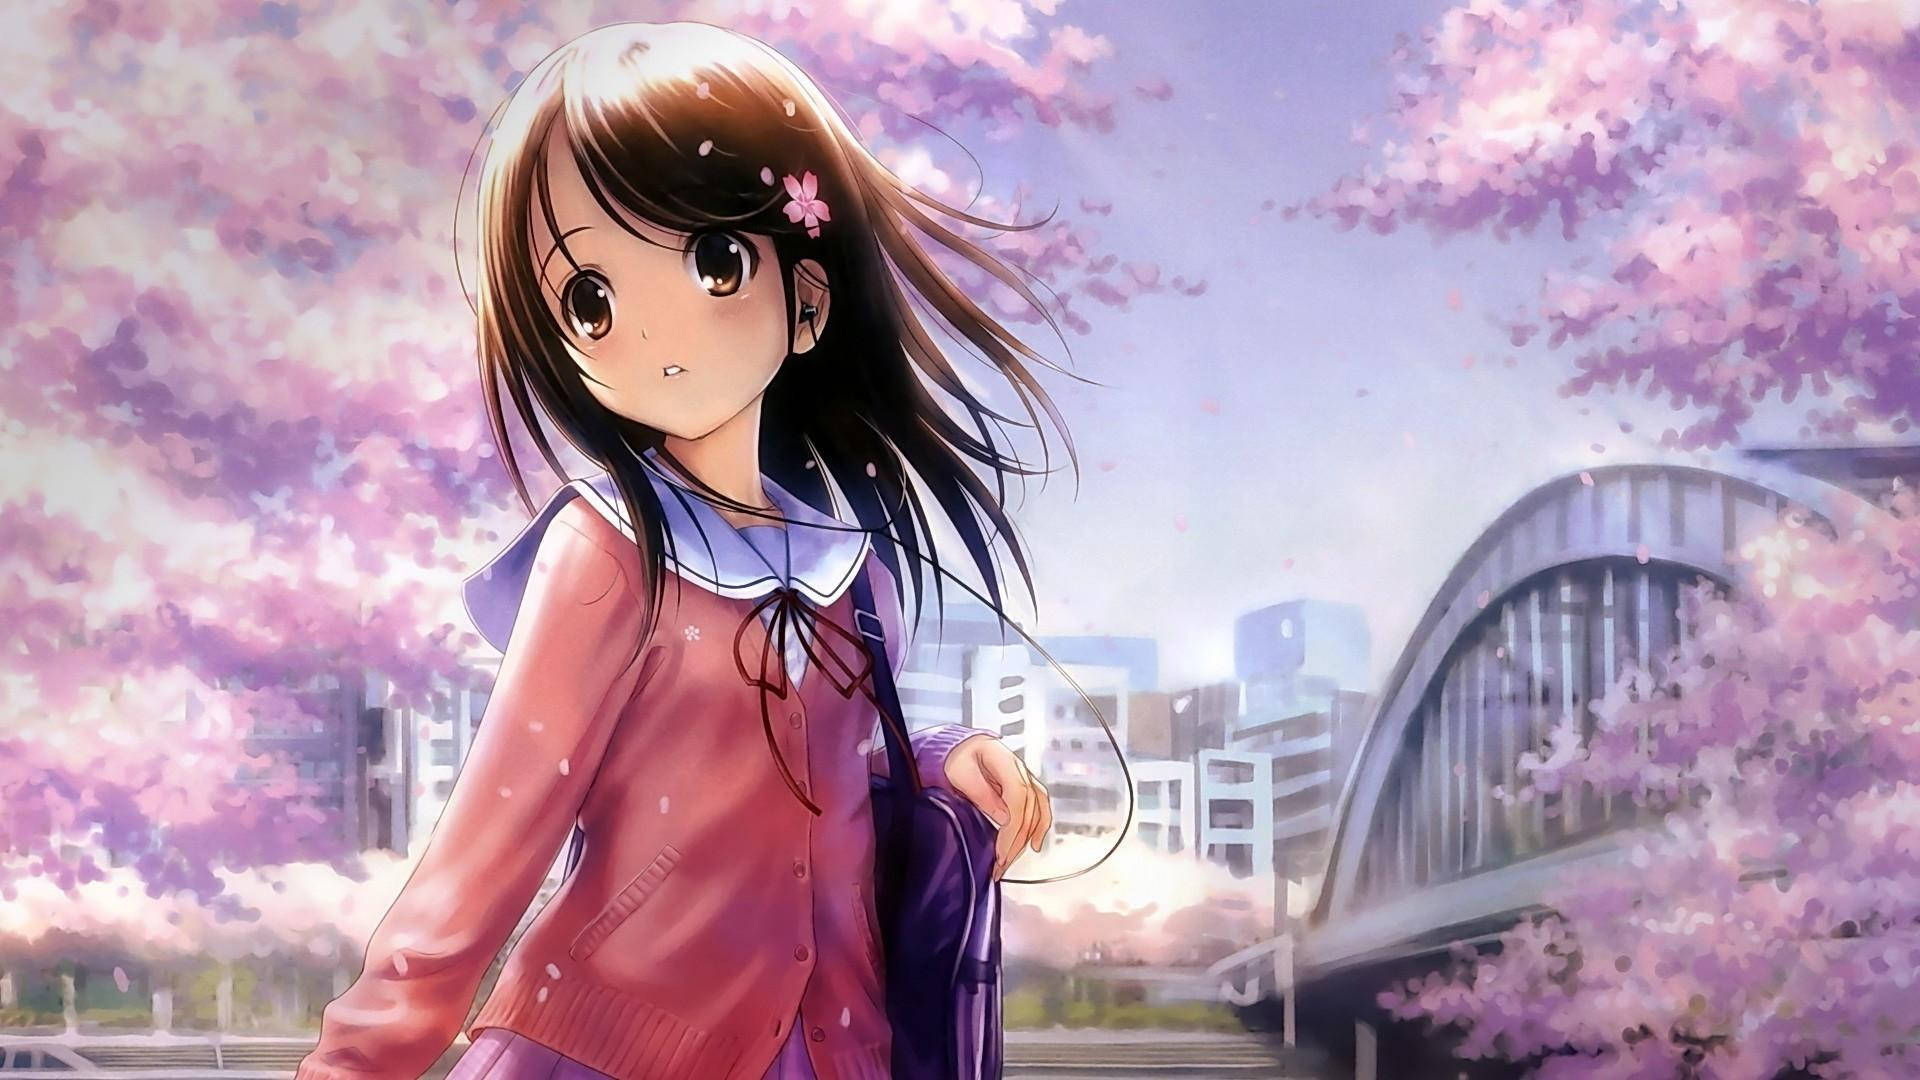 Cute Anime Characters With Sakura Flowers